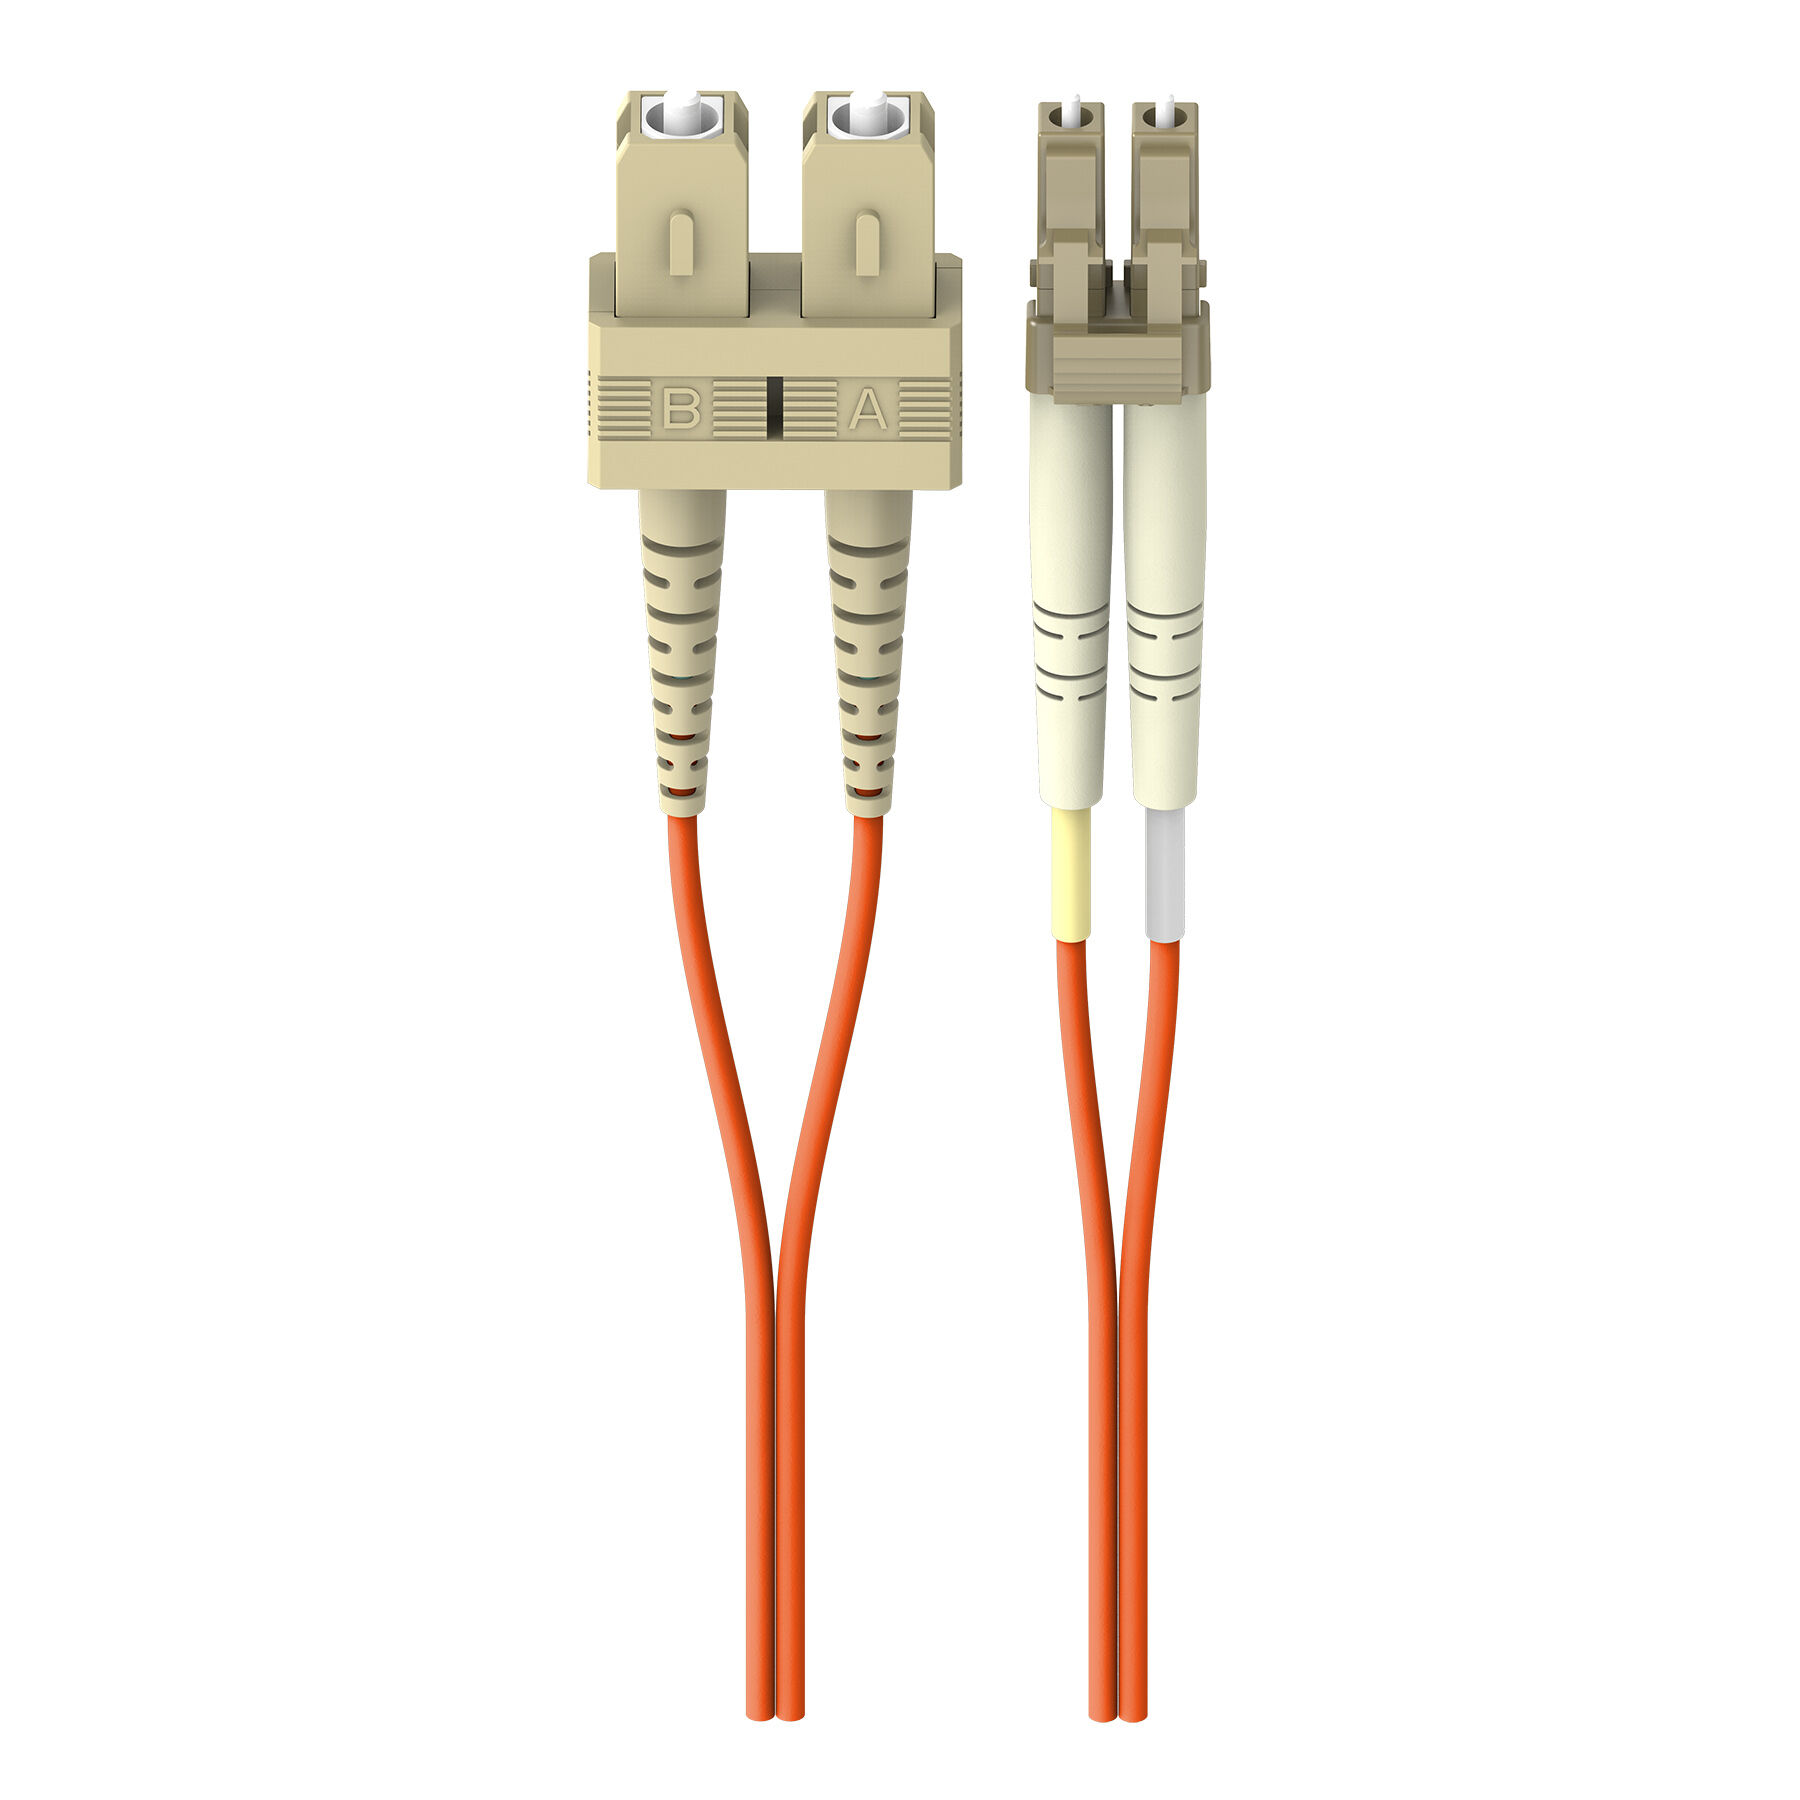 Lc Male Belkin Belkin F2f202ll-01m Network Cable Male Lc 3.3 Ft f2f202ll01m 